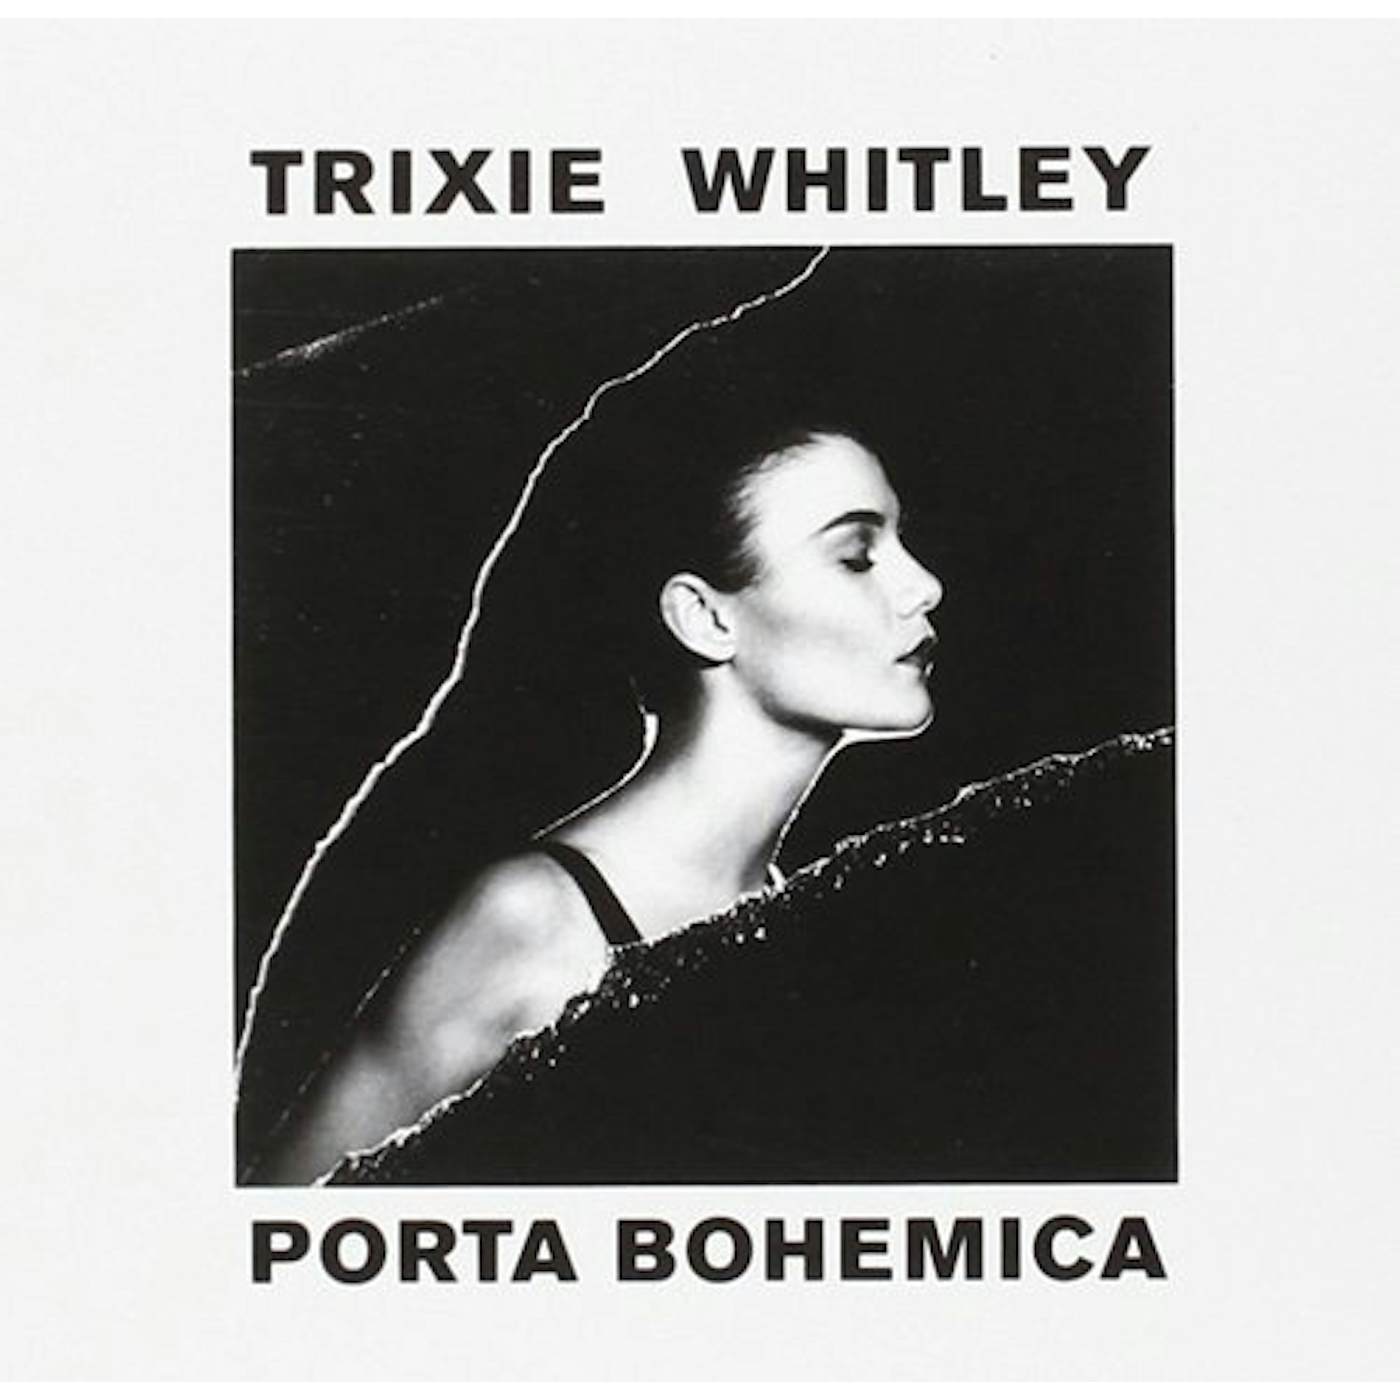 Trixie Whitley PORTA BOHEMICA Vinyl Record - UK Release